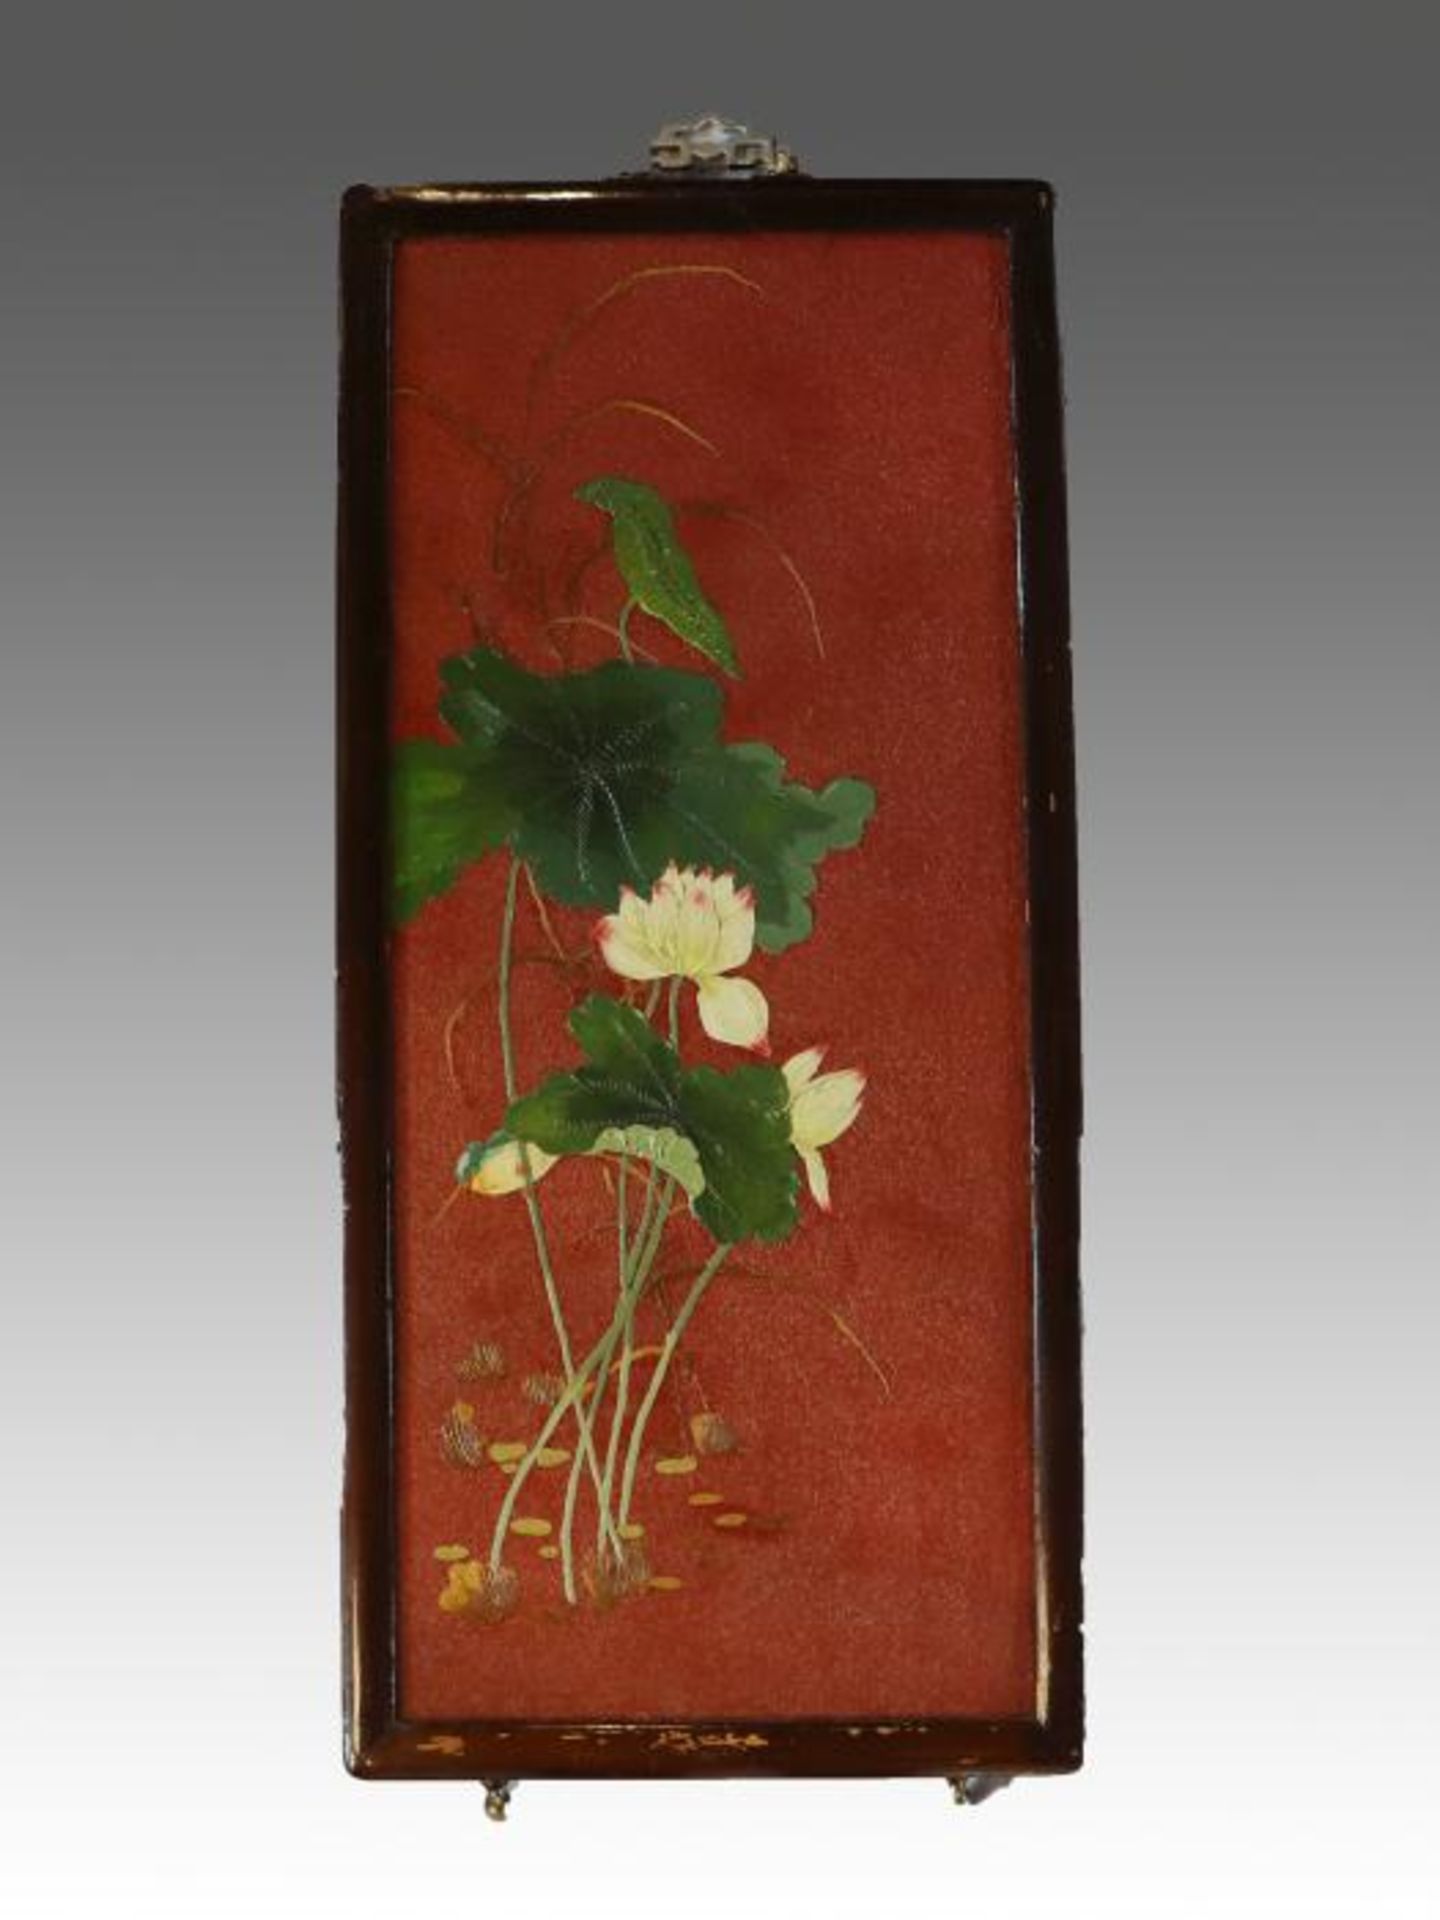 Bild1.H. 20.Jh., China, Holzplatte, polychrome Lackarbeit auf rotem Fond, Seerosenblüten m. Kolibri,